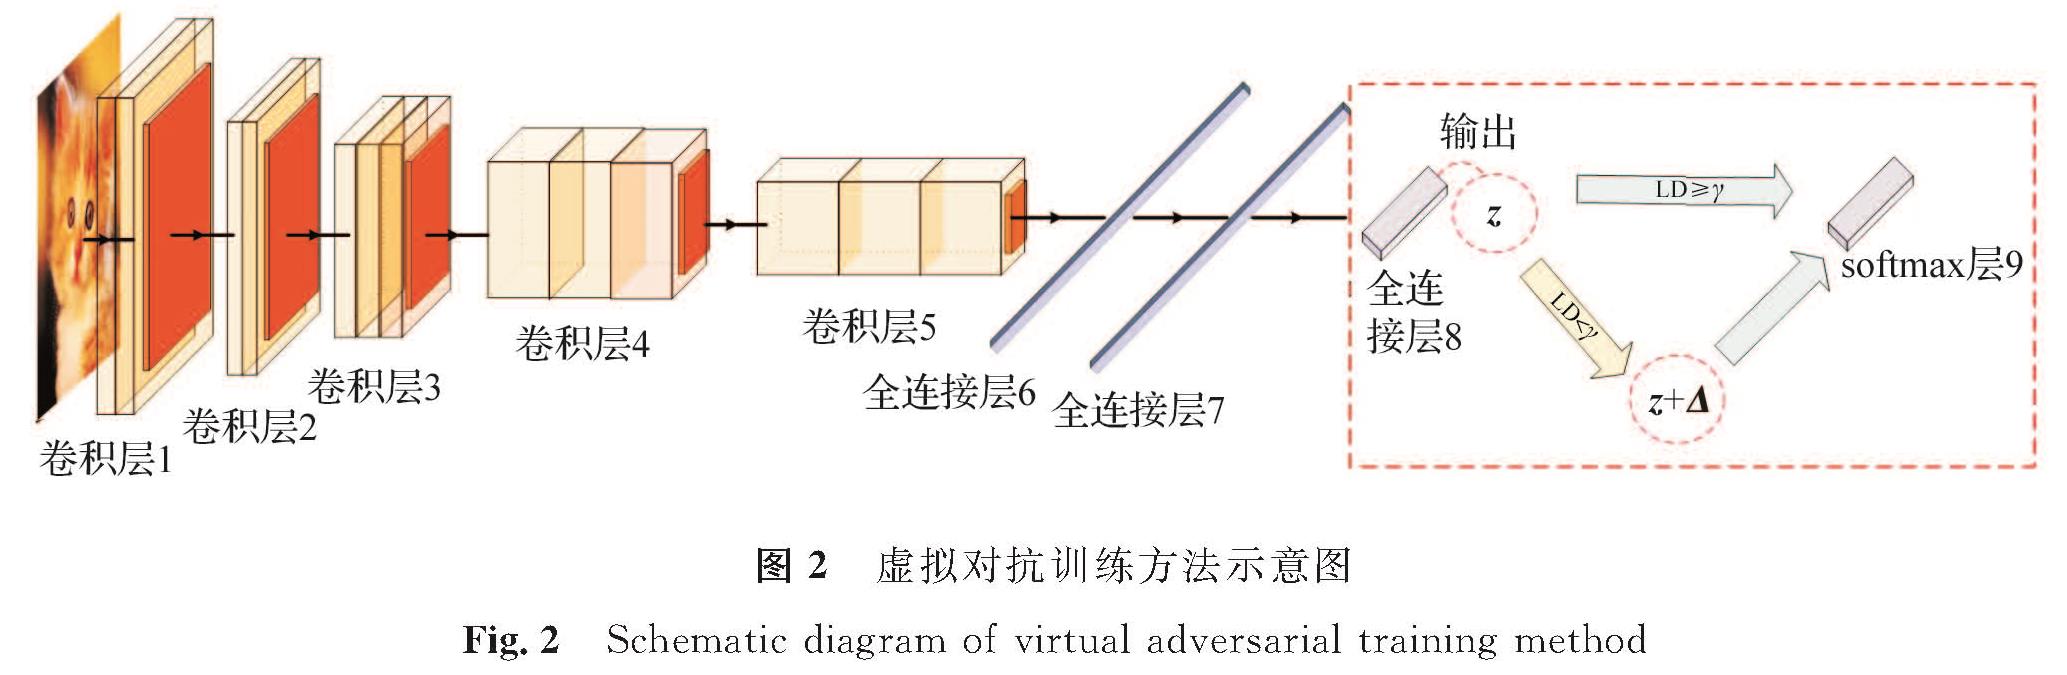 图2 虚拟对抗训练方法示意图<br/>Fig.2 Schematic diagram of virtual adversarial training method